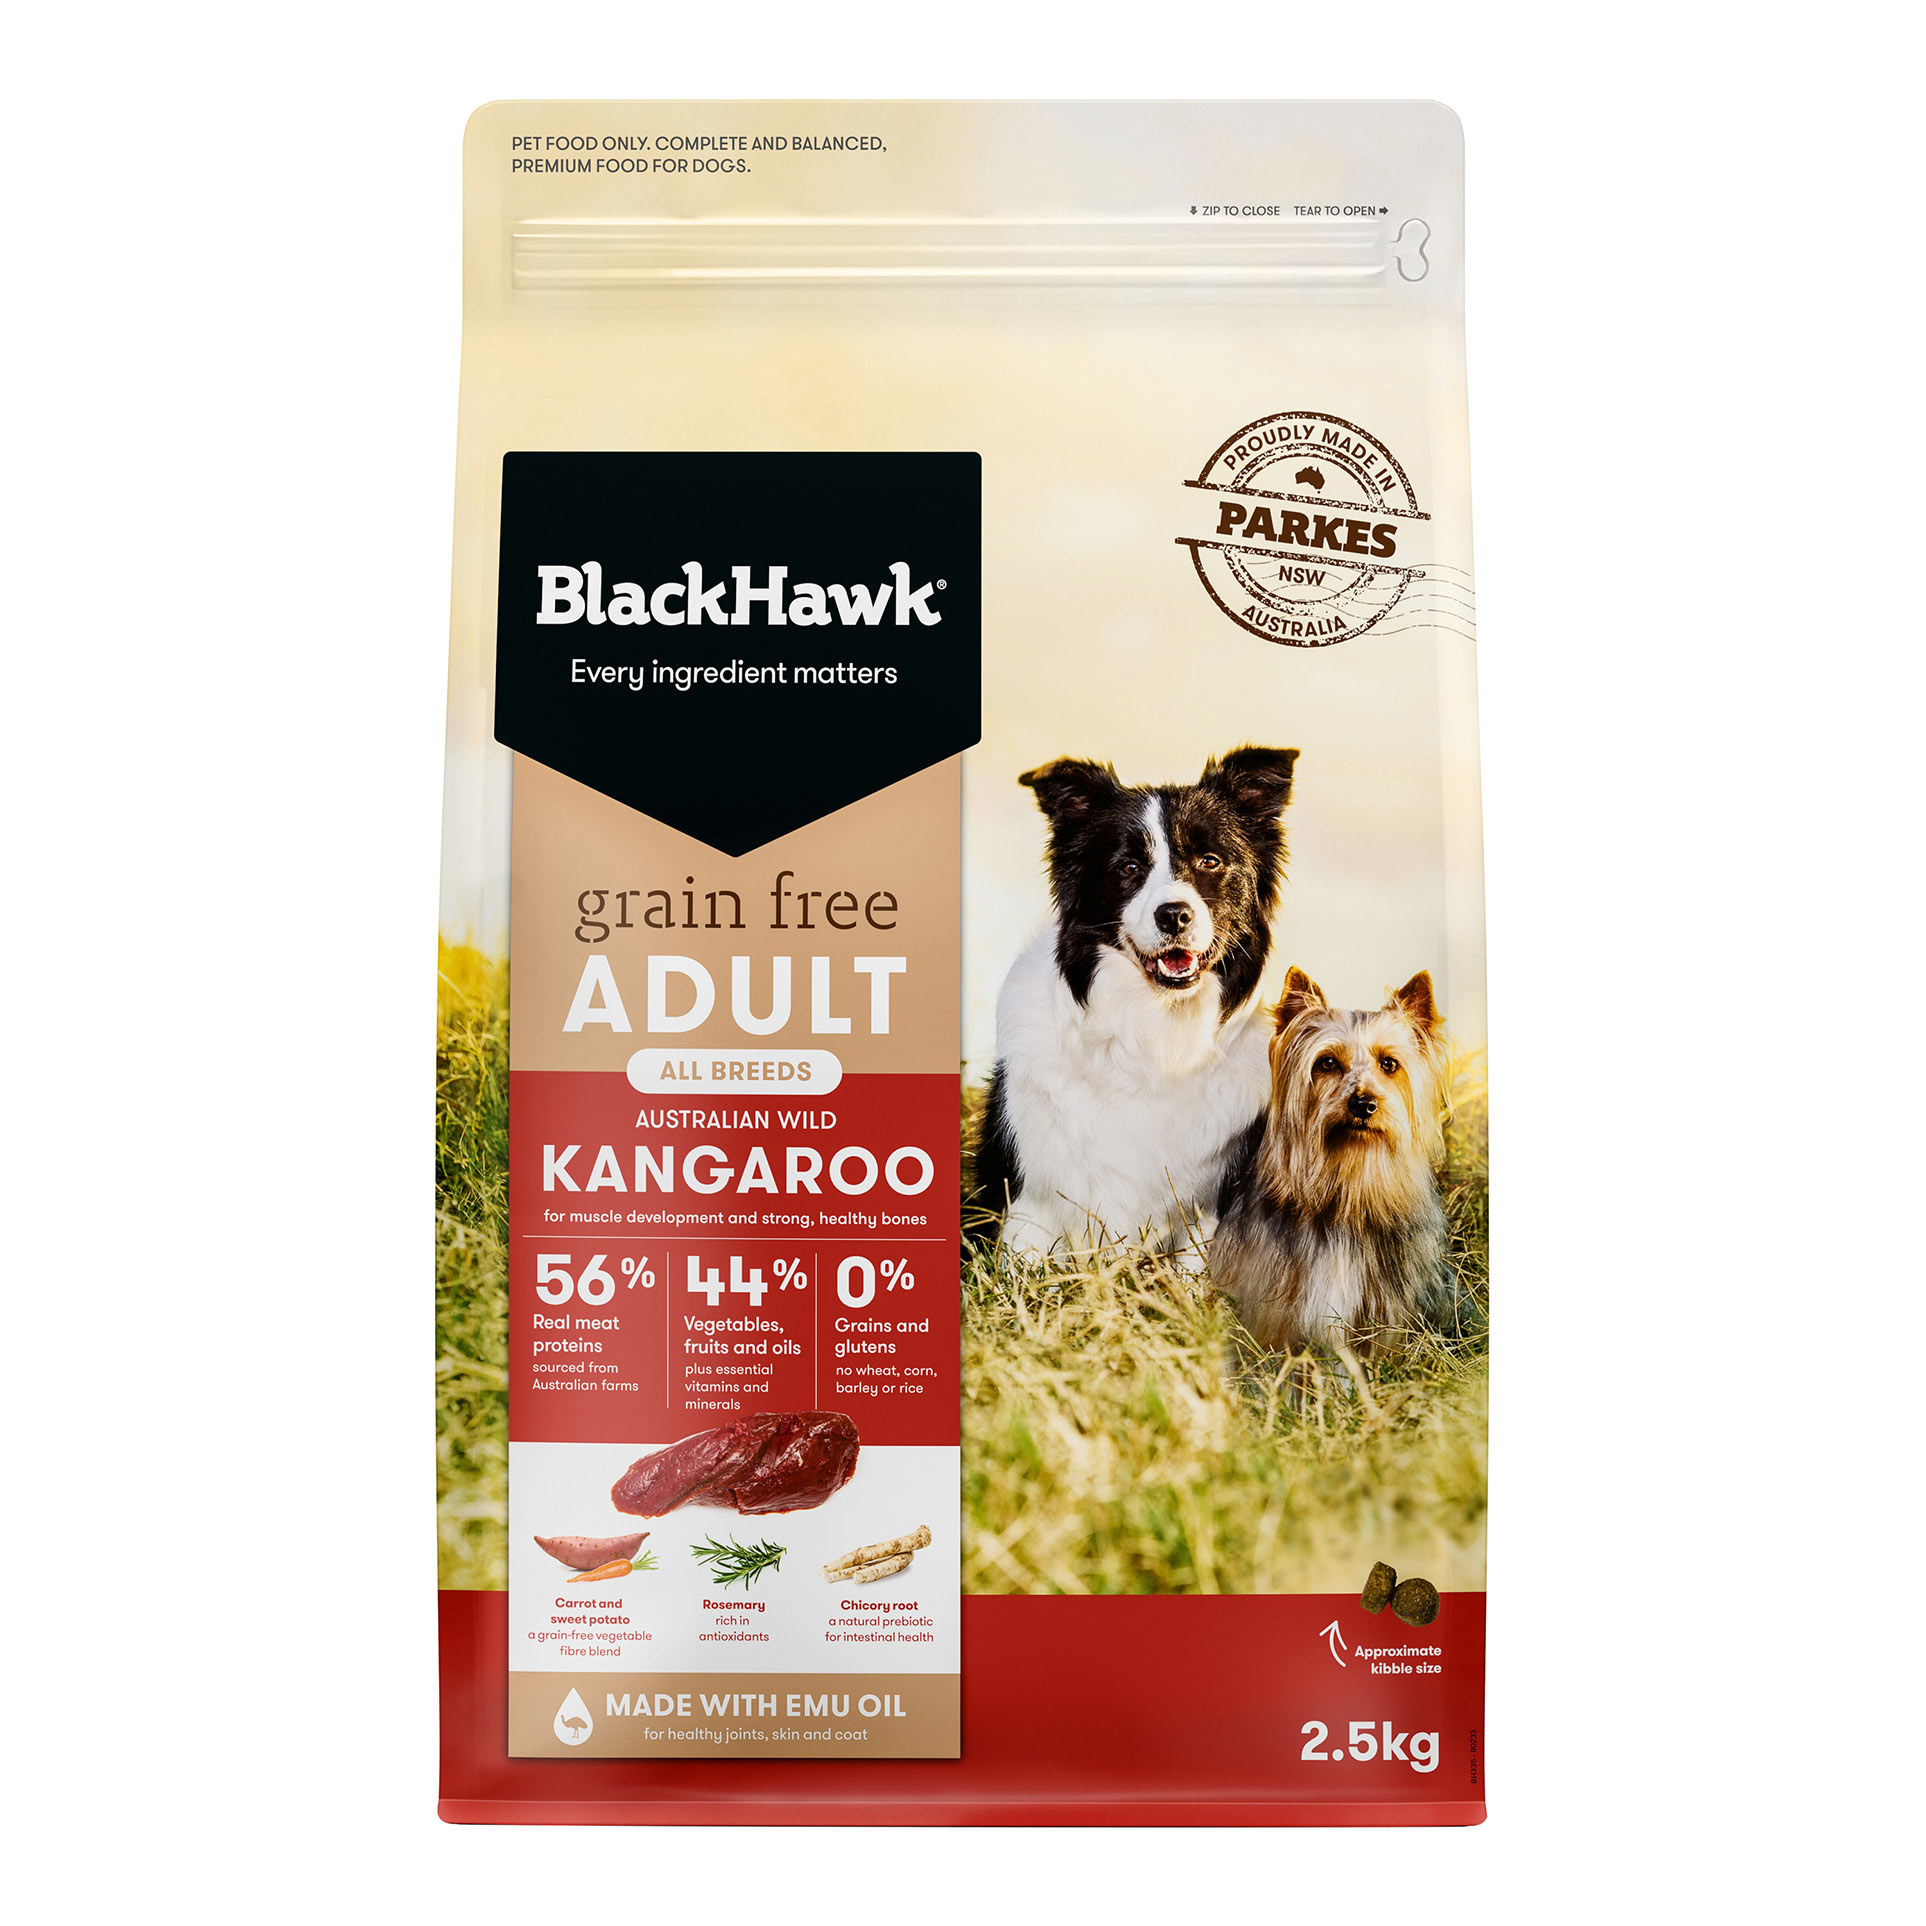 Grain Free Adult Dog Food - Kangaroo